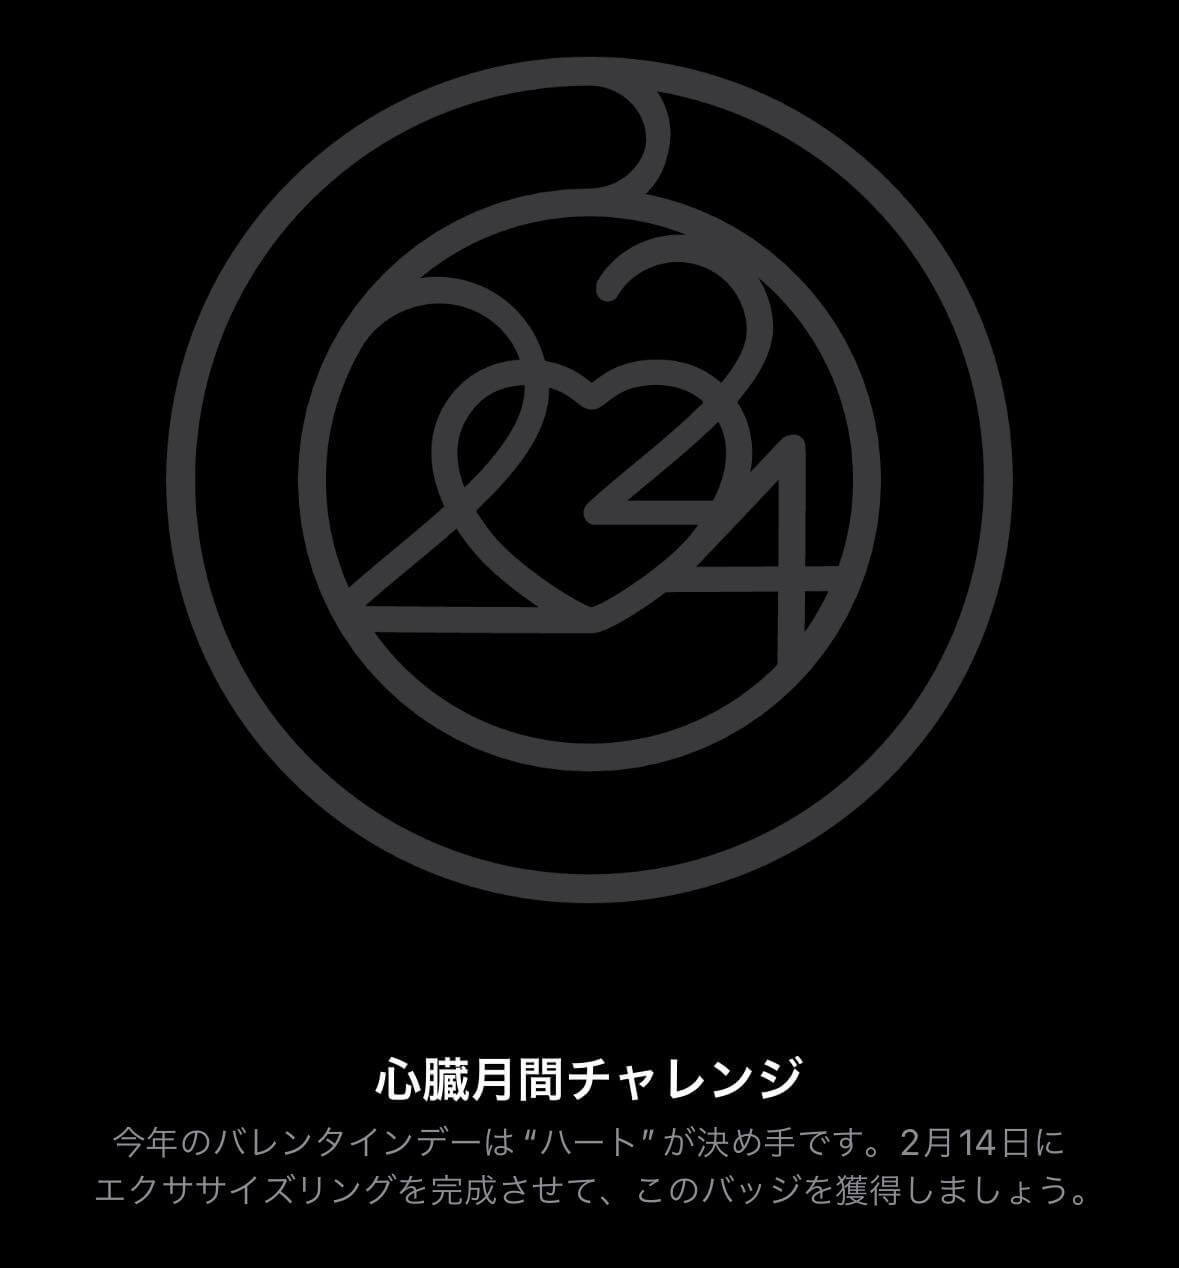 Apple、｢Apple Watch｣のチャレンジ企画｢心臓月間チャレンジ｣を2月14日に開催と正式発表